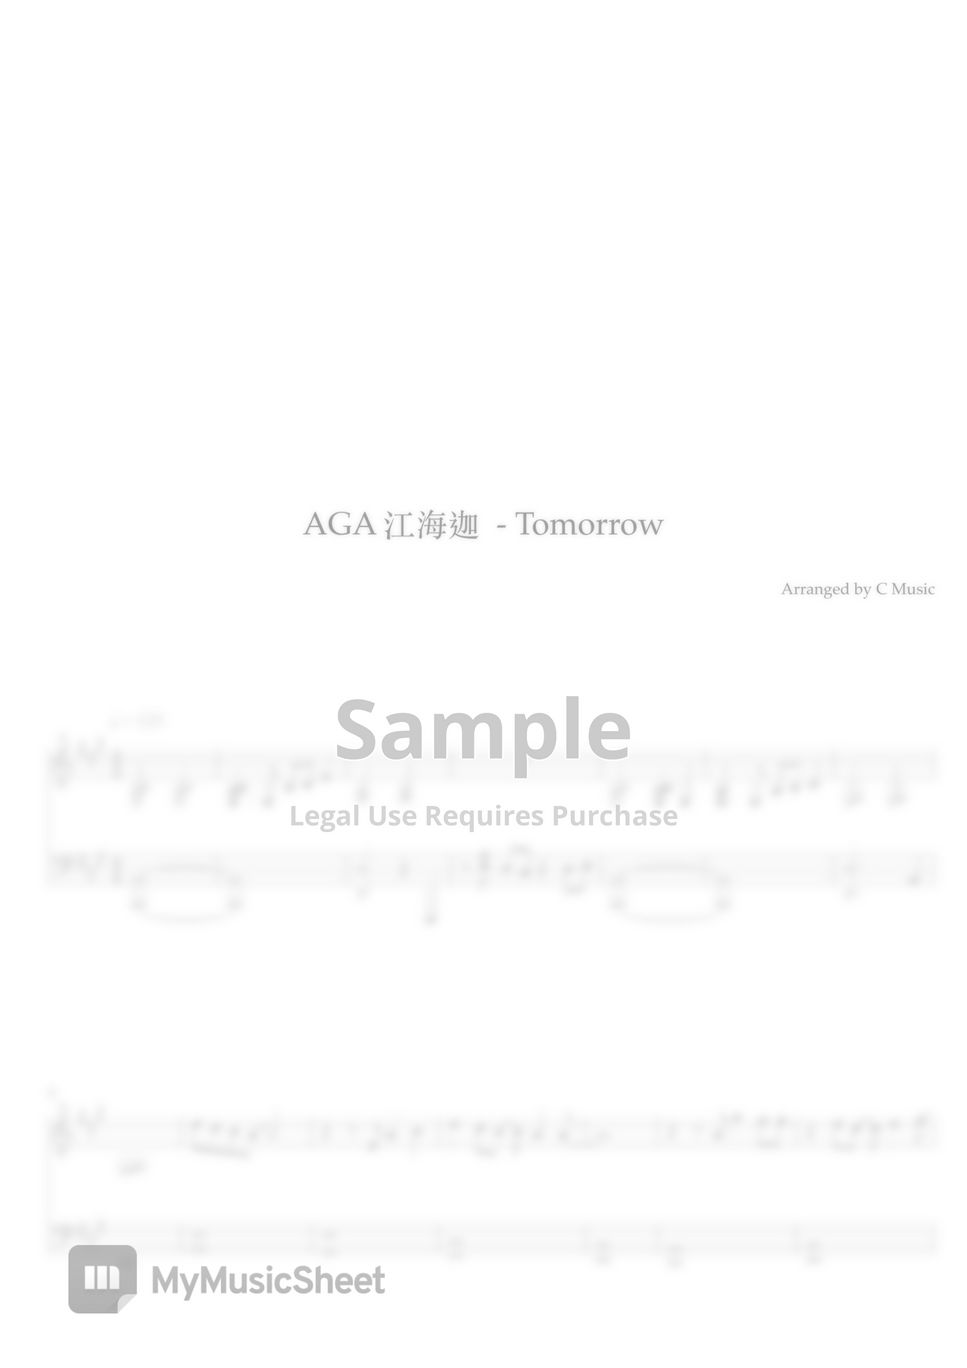 AGA 江海迦 - Tomorrow by C Music